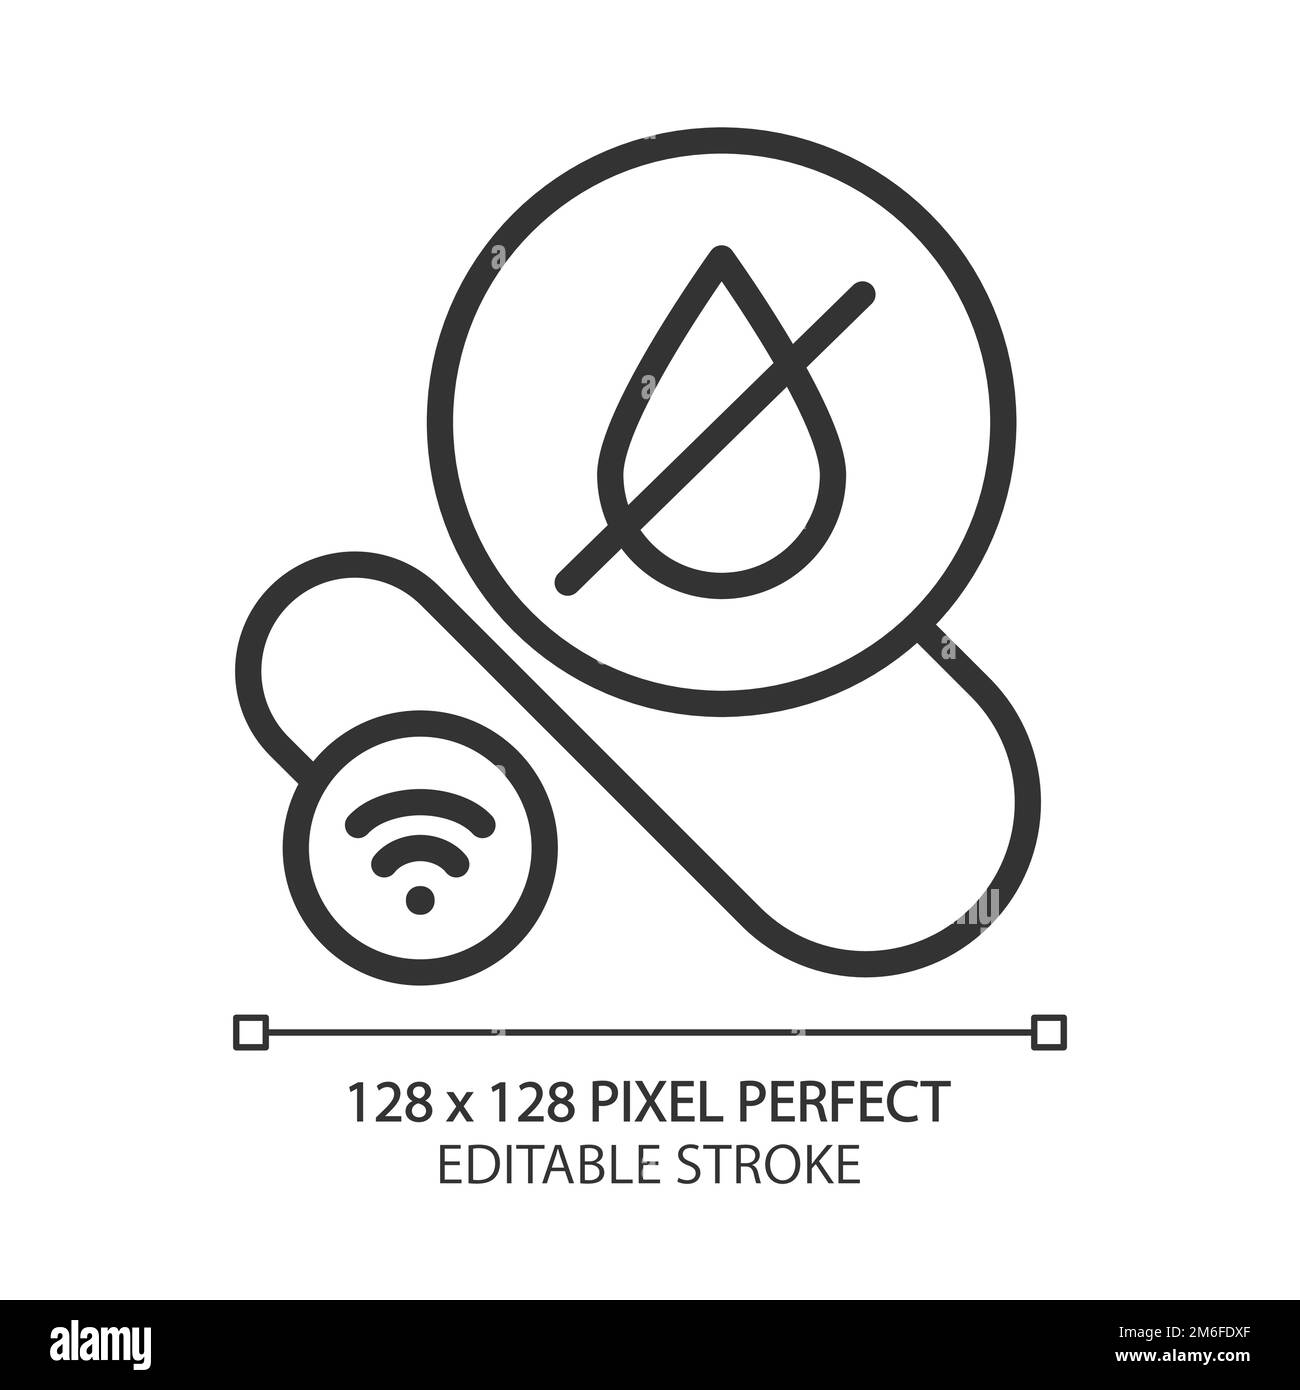 Smart leak detector pixel perfect linear icon Stock Vector